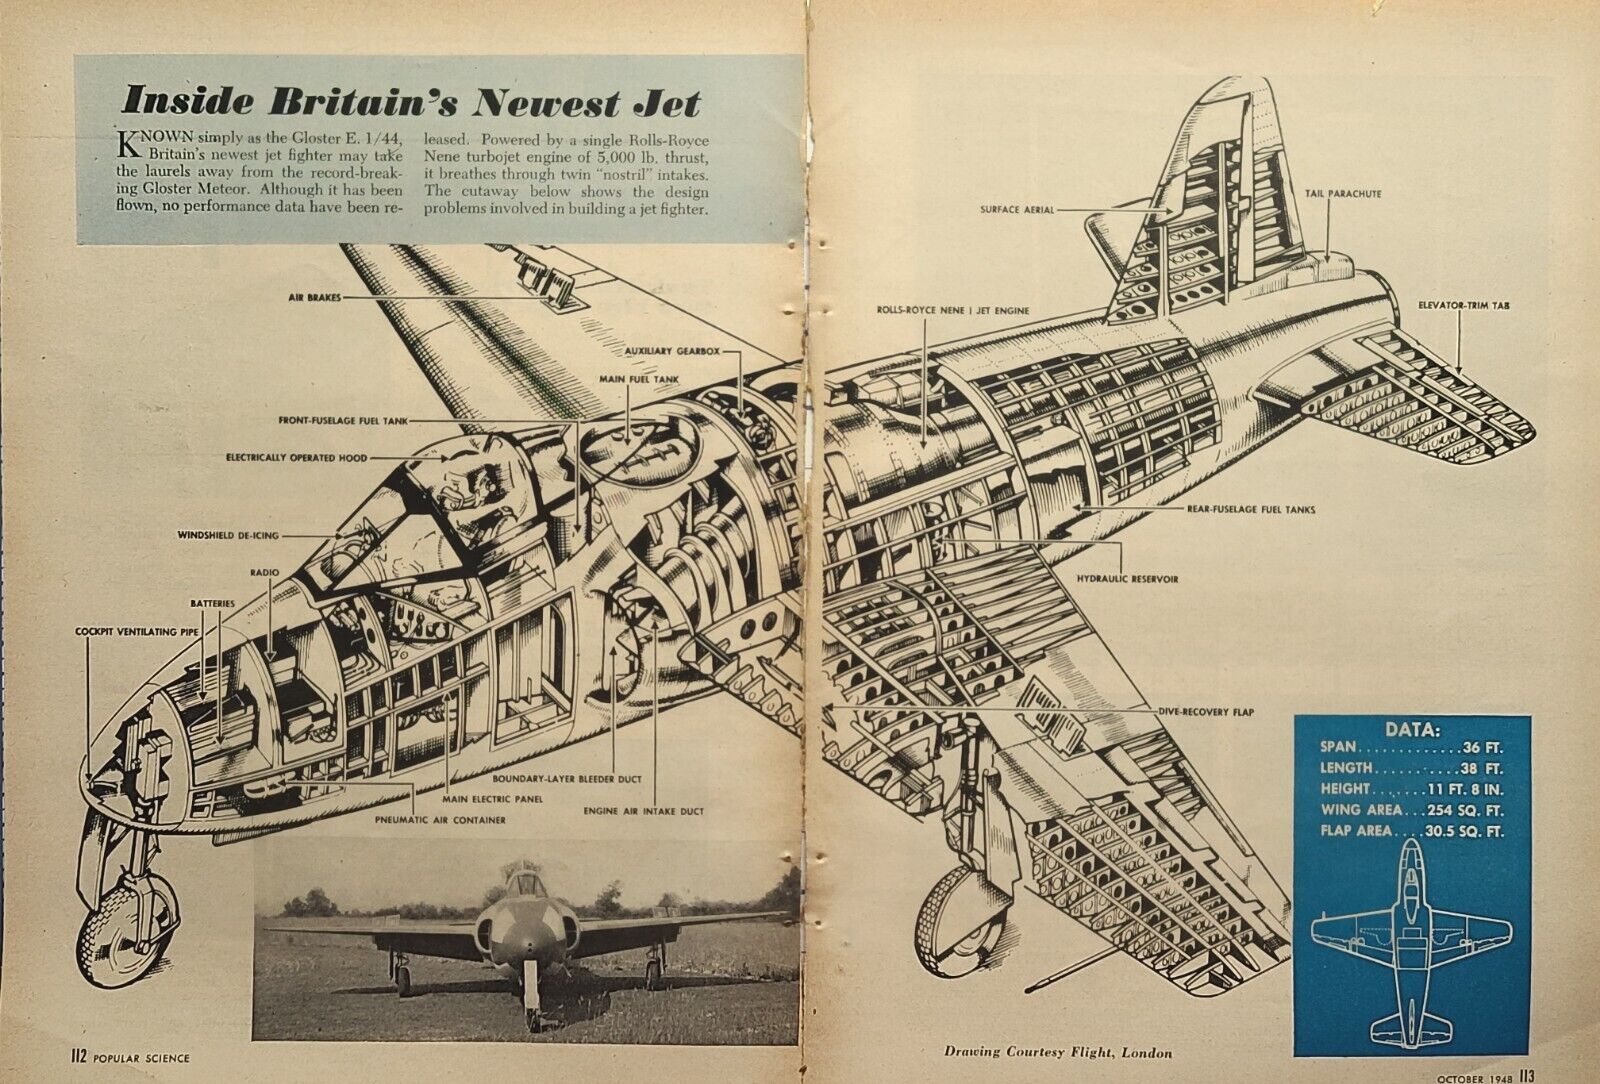 Popular Science Britain's Gloster E Cutaway Diagram Vintage Magazine Print 1948